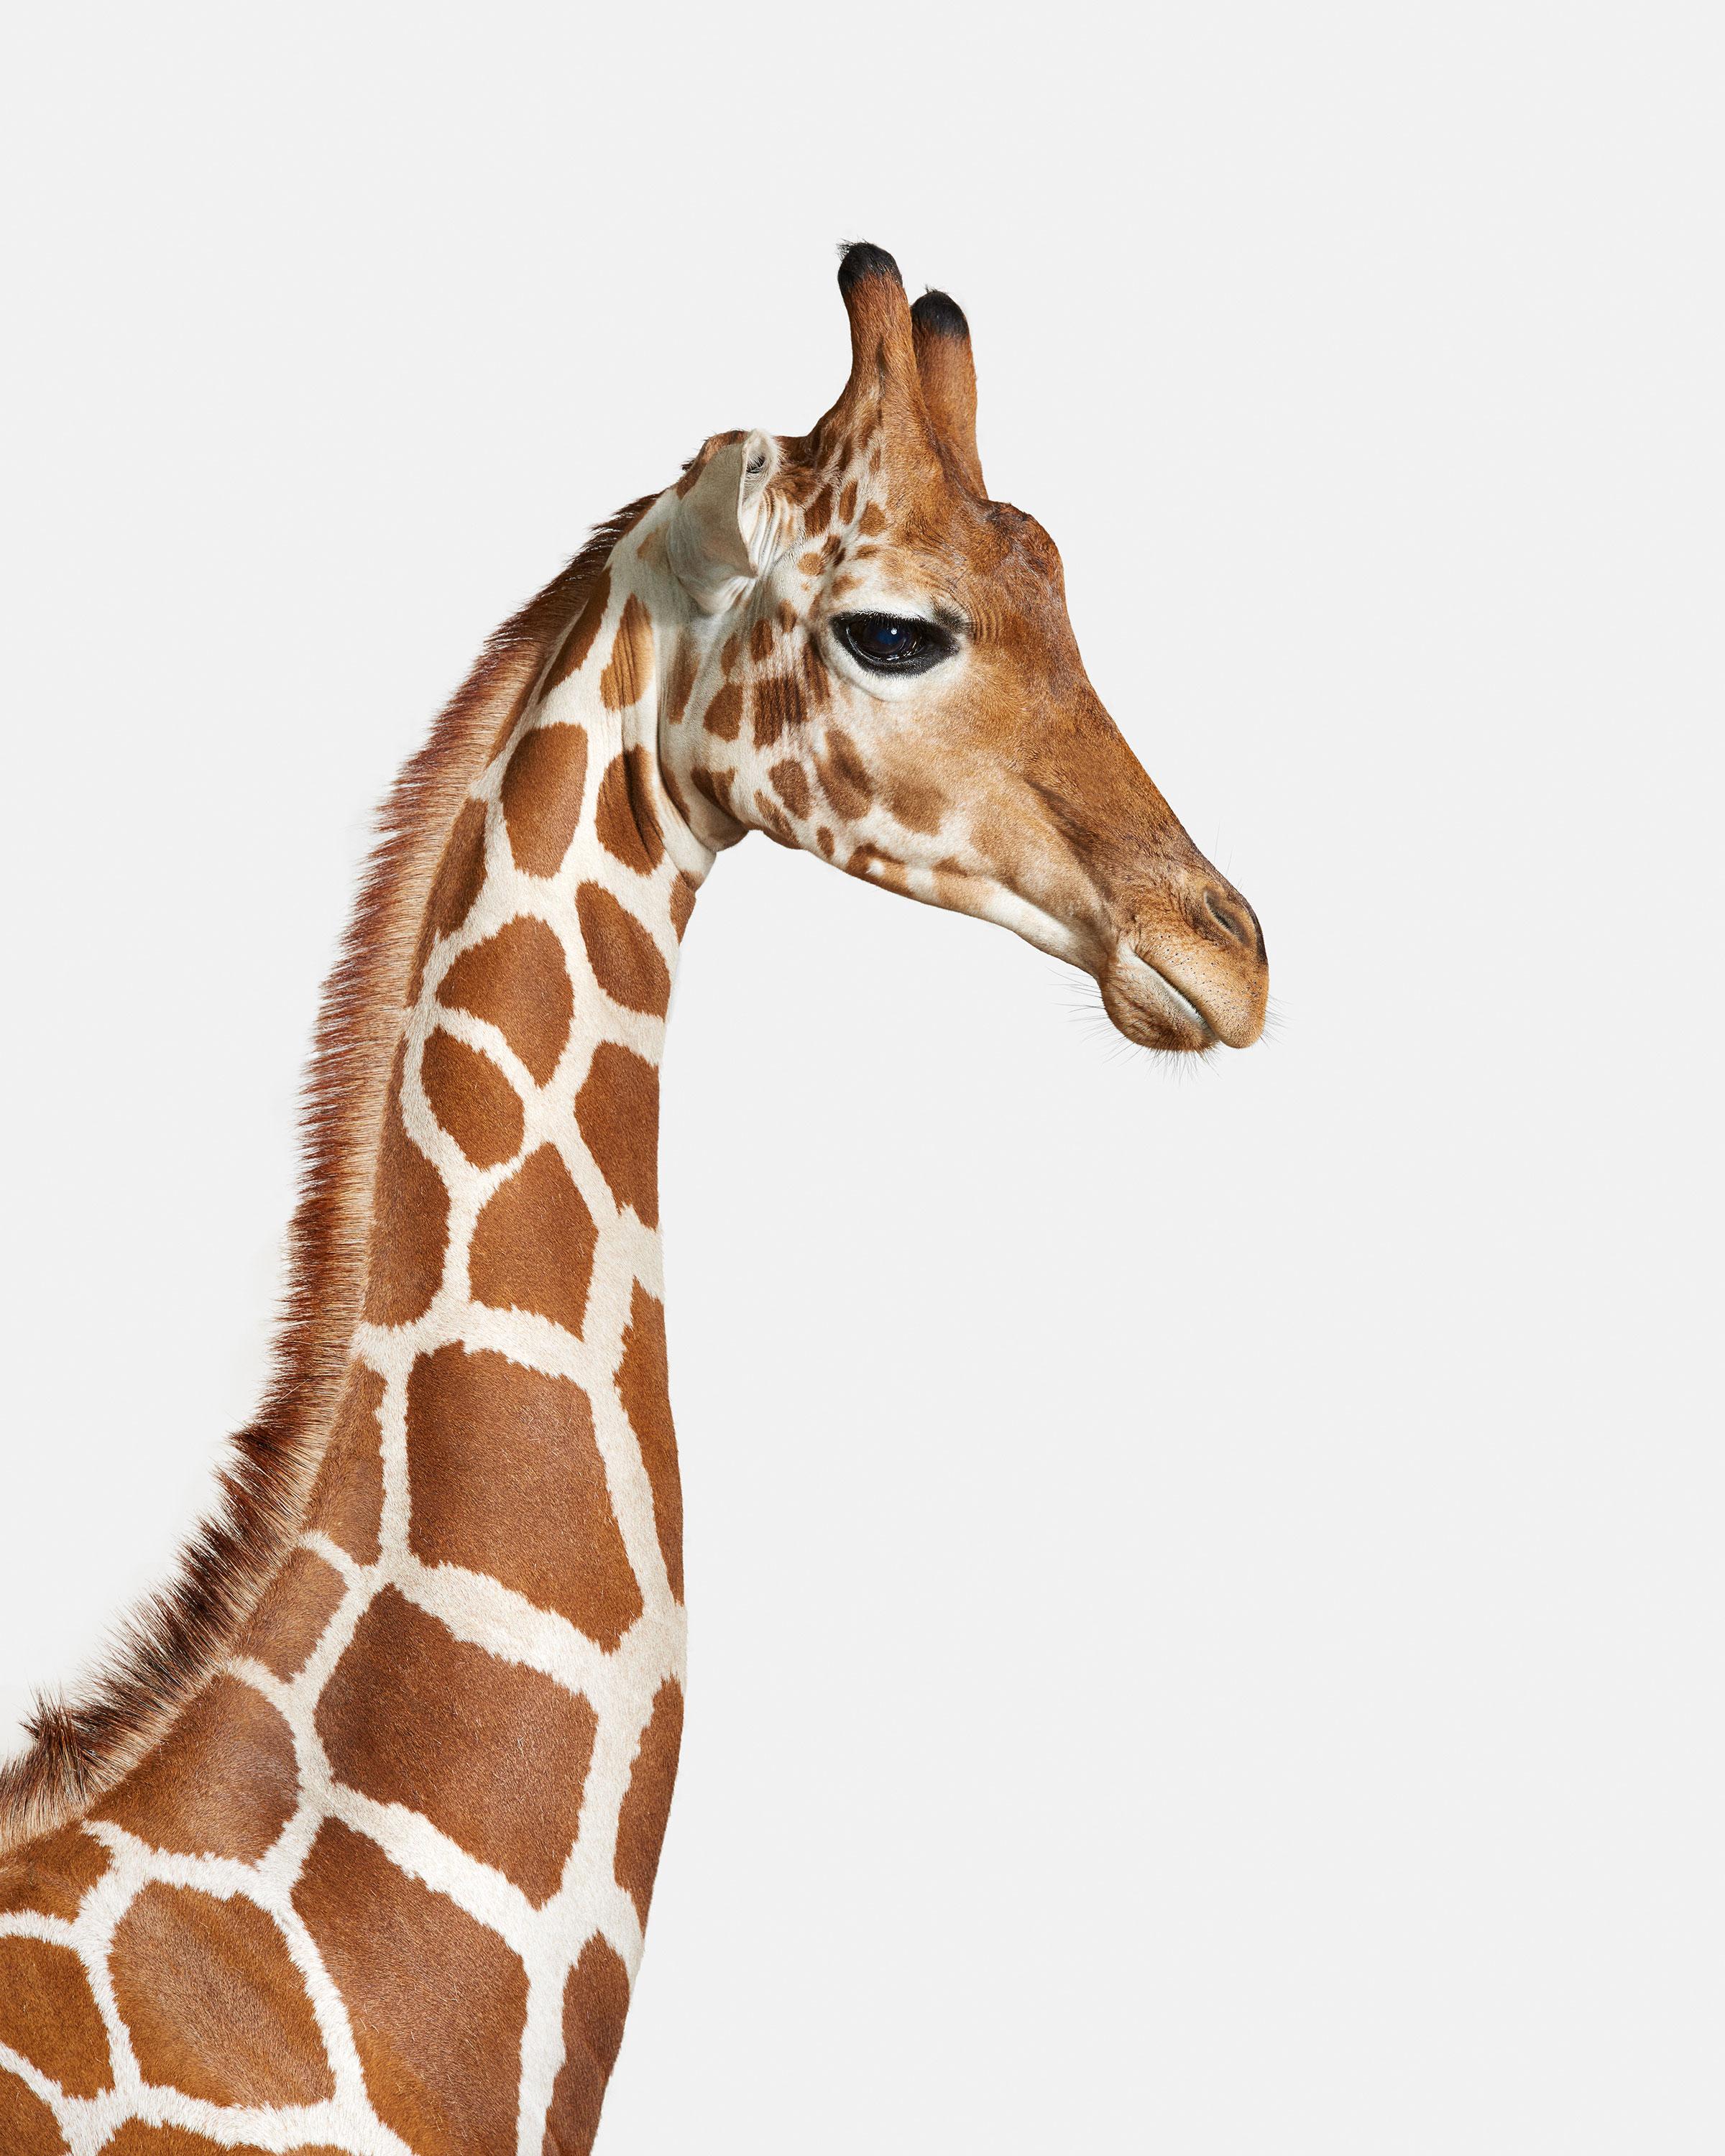 Randal Ford Color Photograph - Giraffe No. 1 (37.5" x 30")